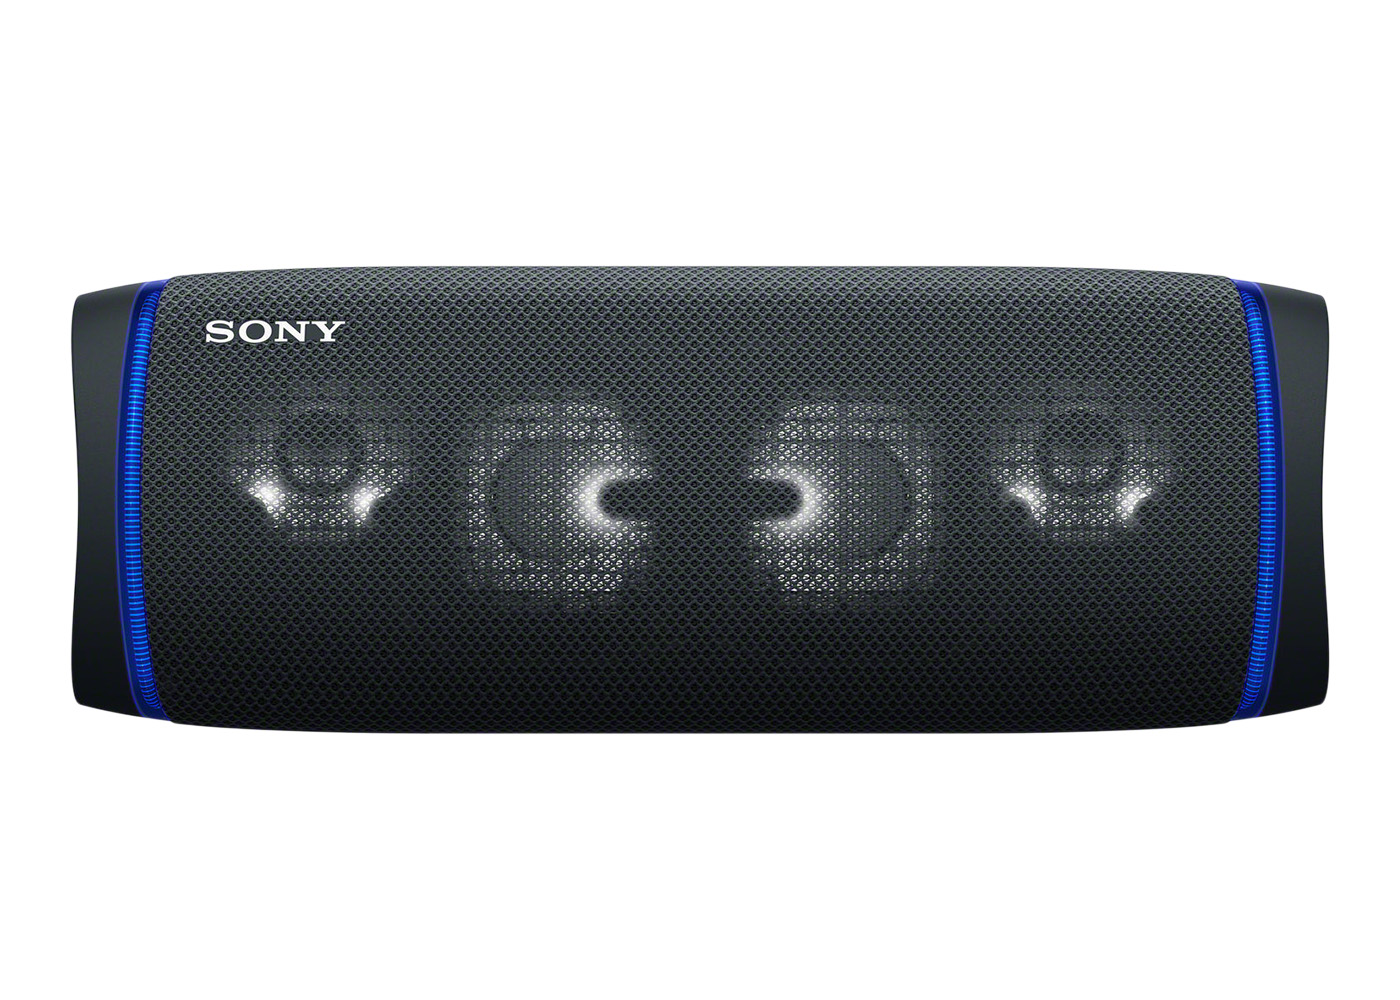 Sony Portable Bluetooth Speaker SRS-XB43/B Black - US